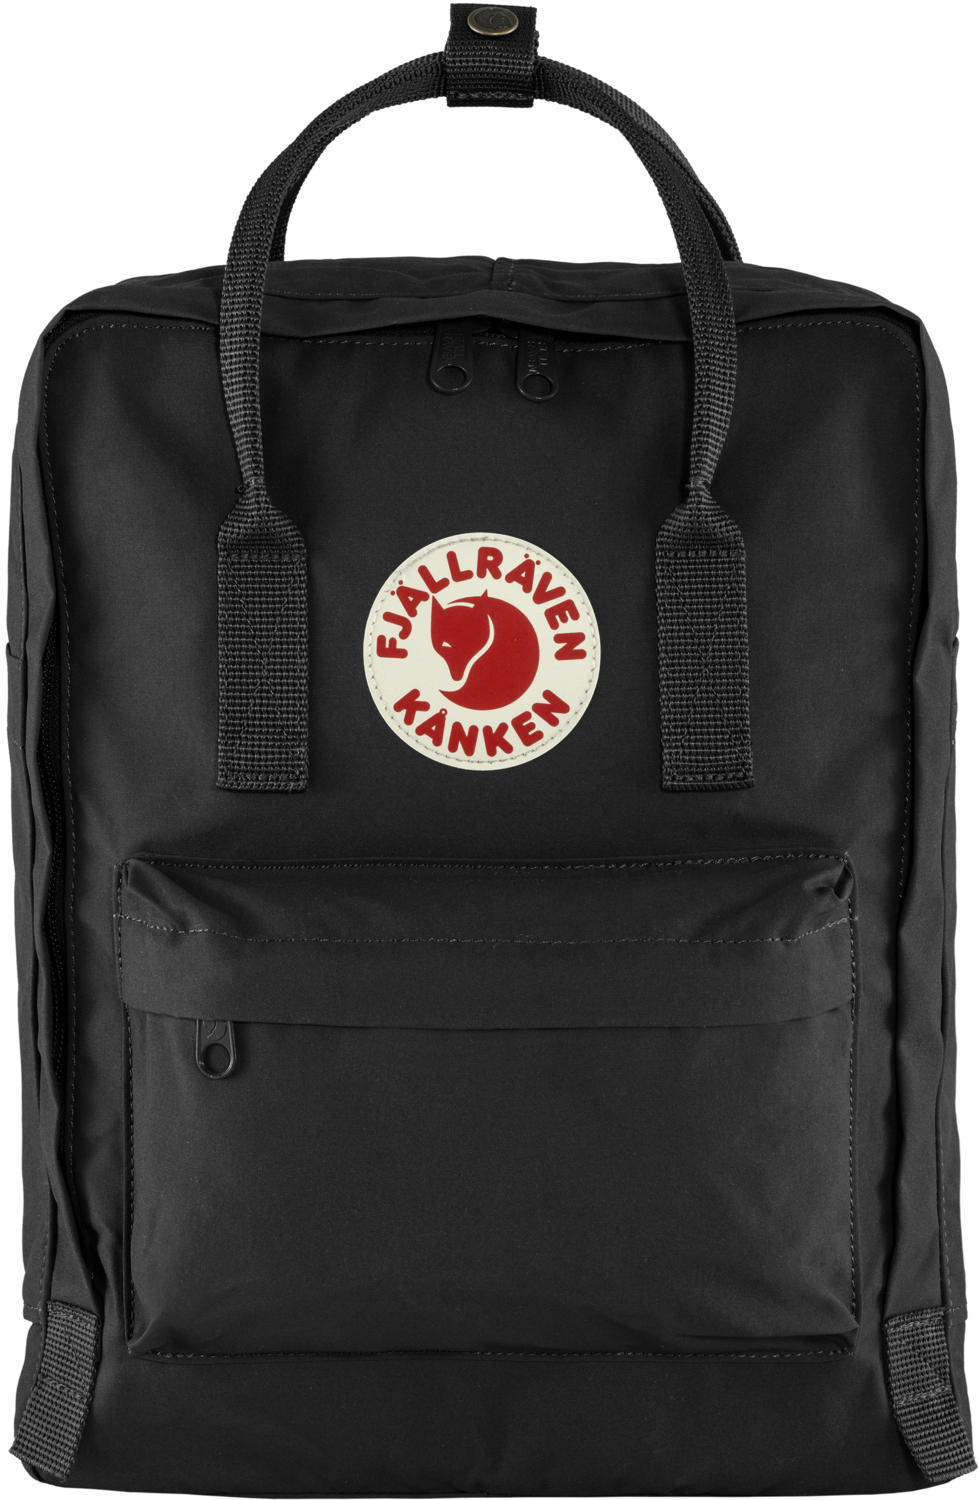 dark black kanken backpack